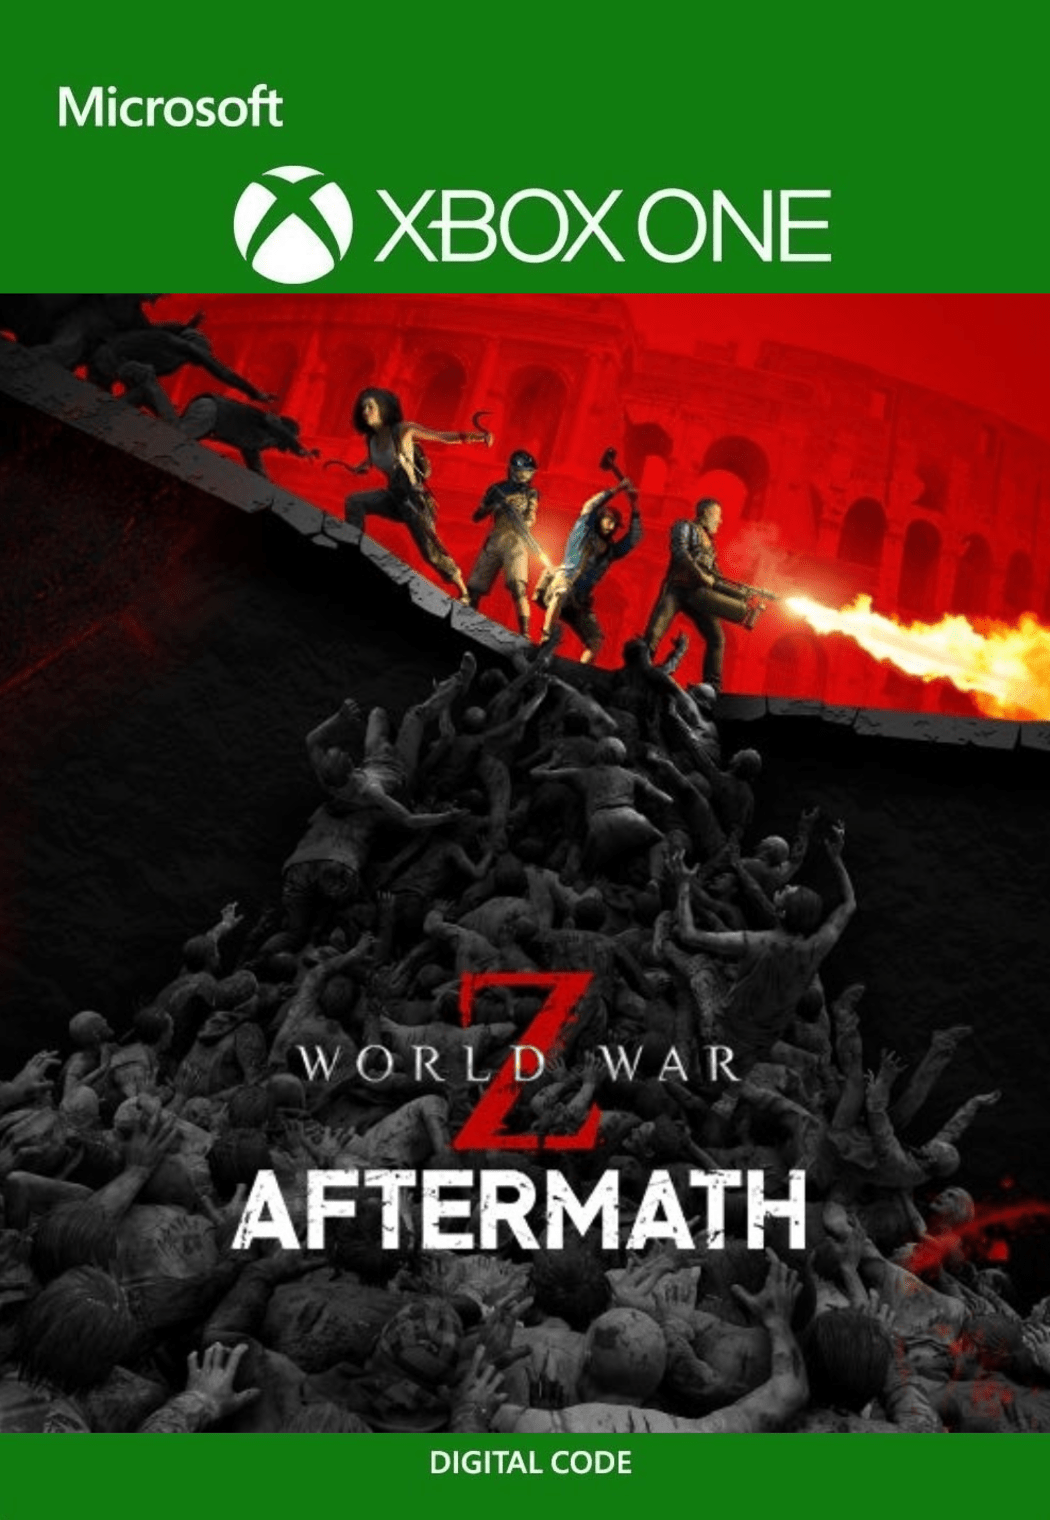 World War Z: Aftermath Xbox Series X Review